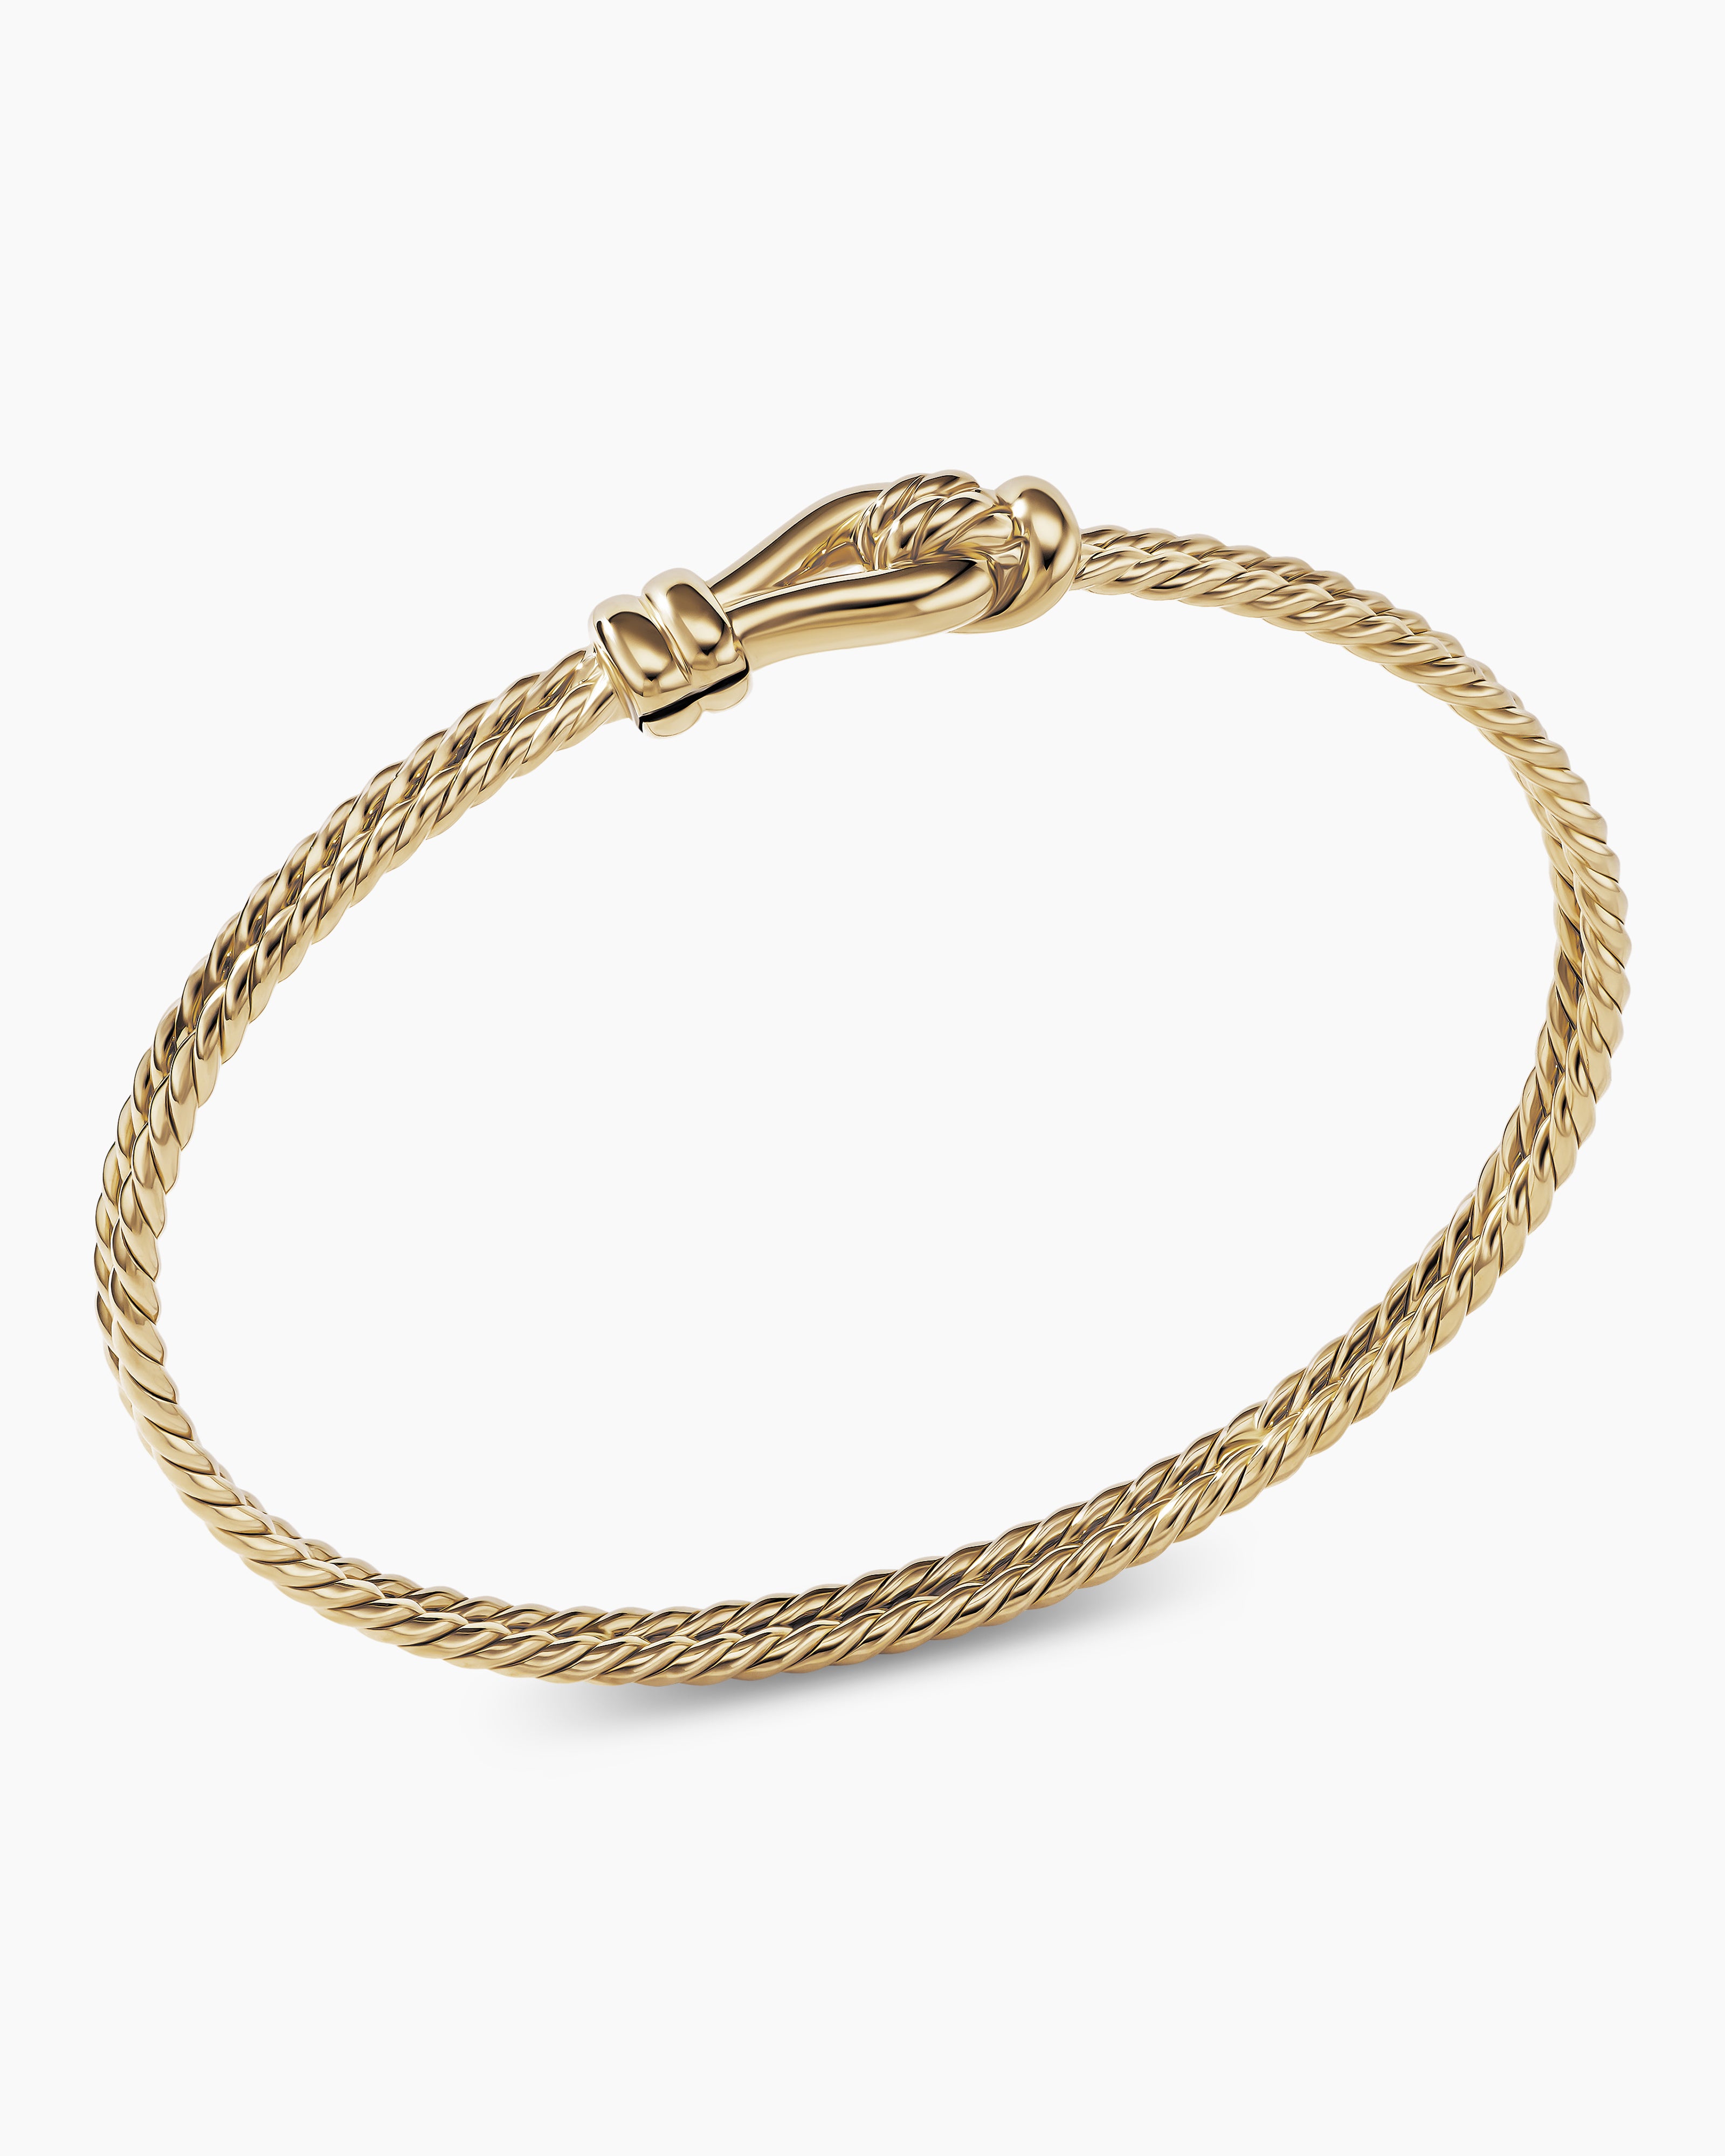 David Yurman Thoroughbred Loop Bracelet with 18K Yellow Gold in Silver